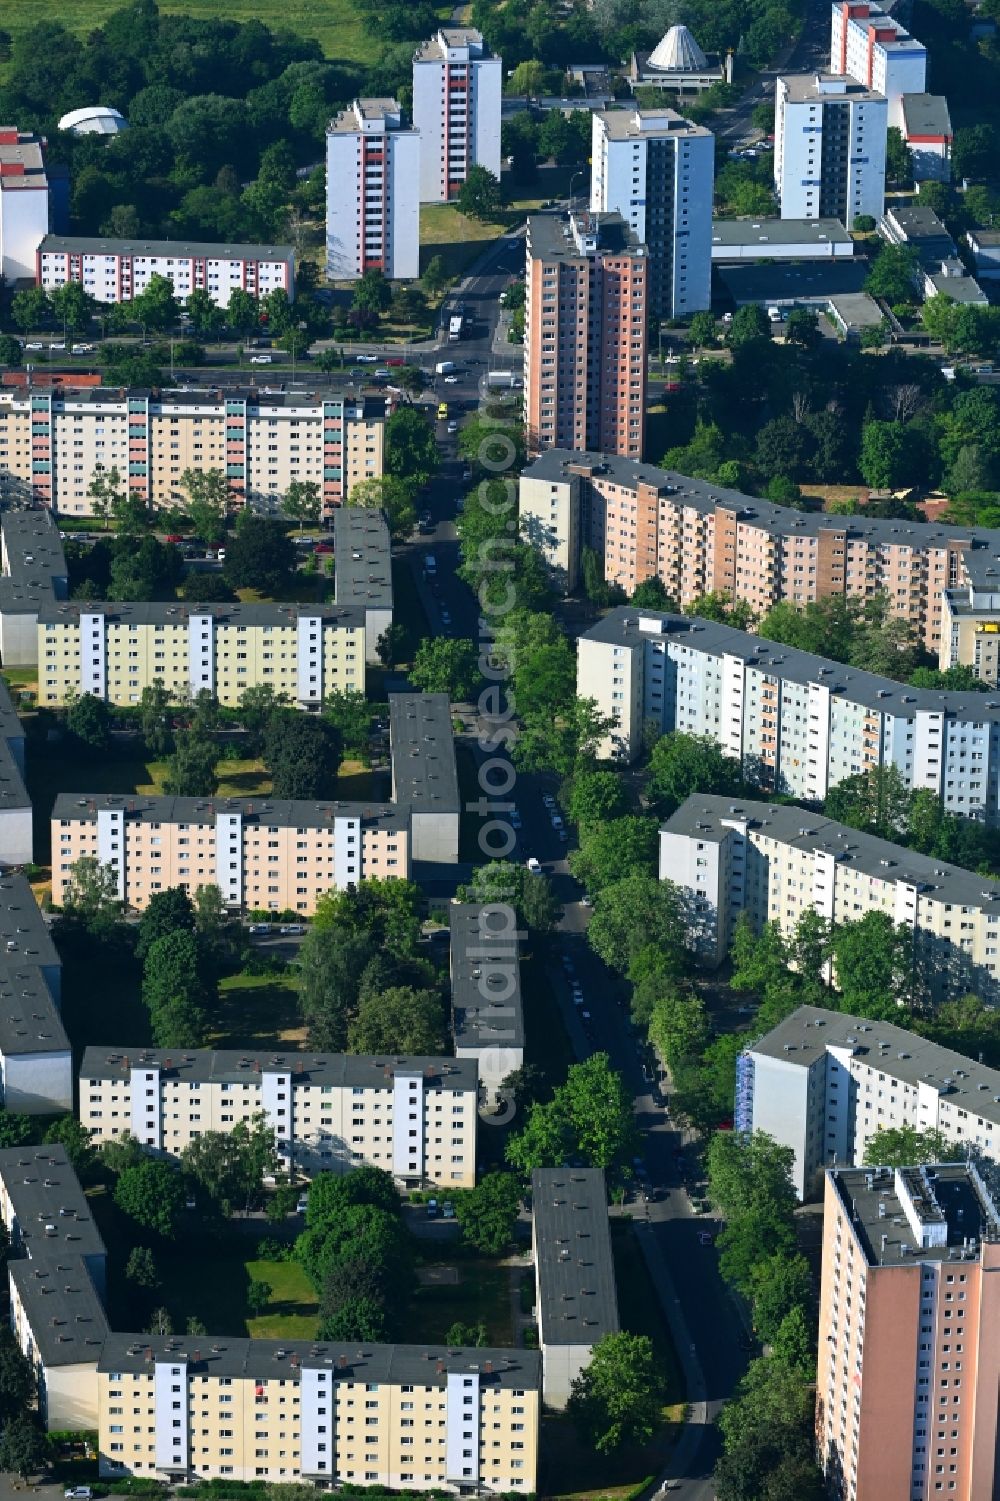 Aerial photograph Berlin - Skyscrapers in the residential area of industrially manufactured settlement on Wasserwerkstrasse in the district Falkenhagener Feld in Berlin, Germany